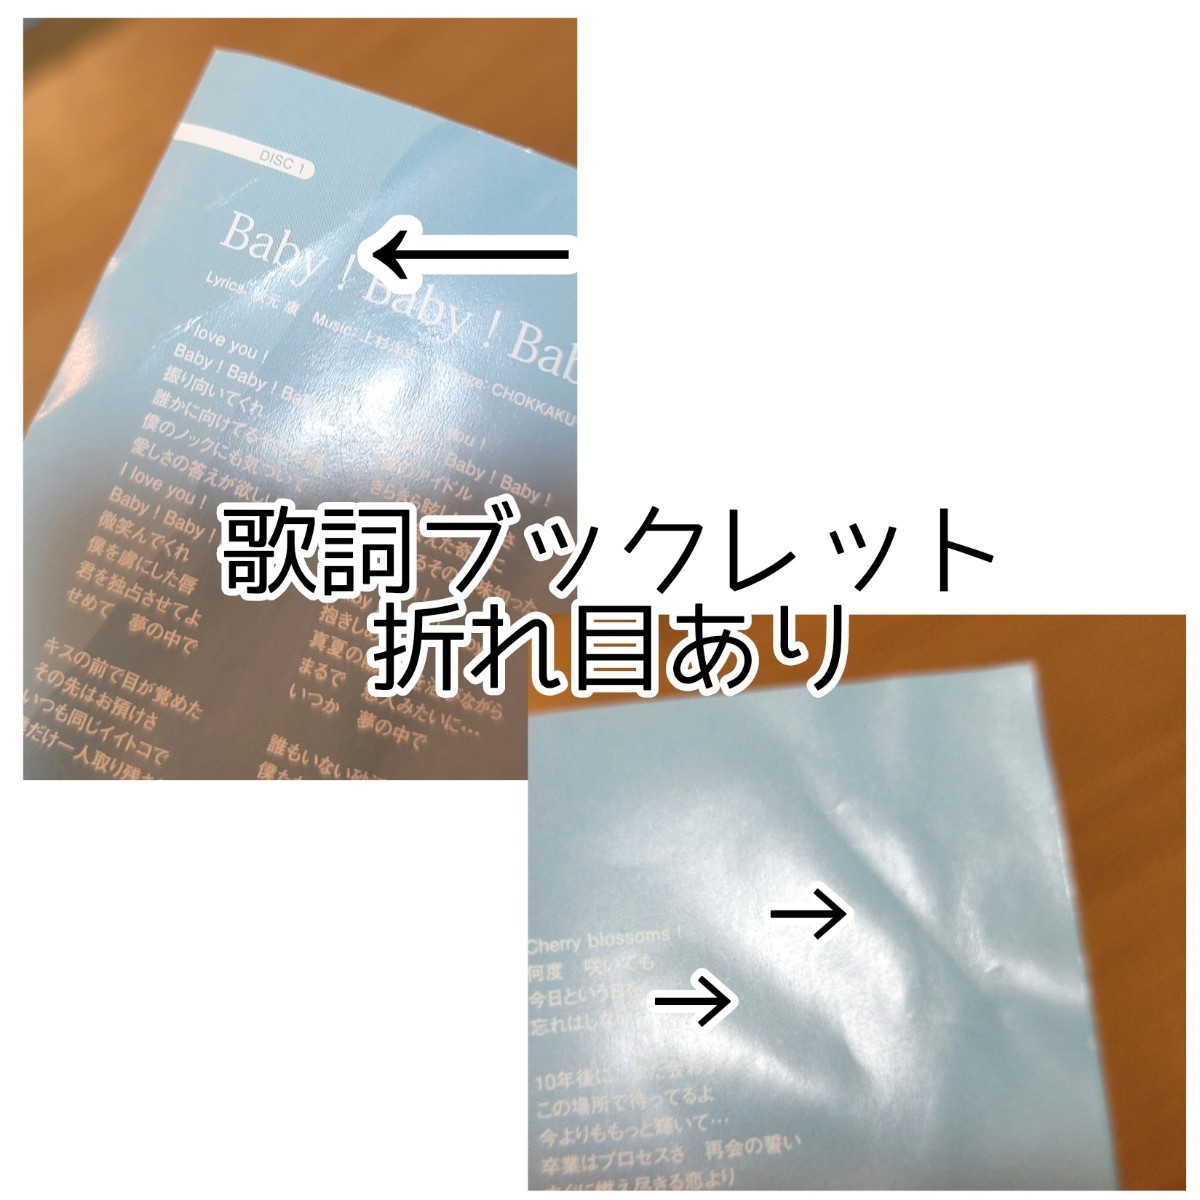 『AKBがいっぱい~ザ・ベスト・ミュージックビデオ~』 DVD 初回限定盤 中古品